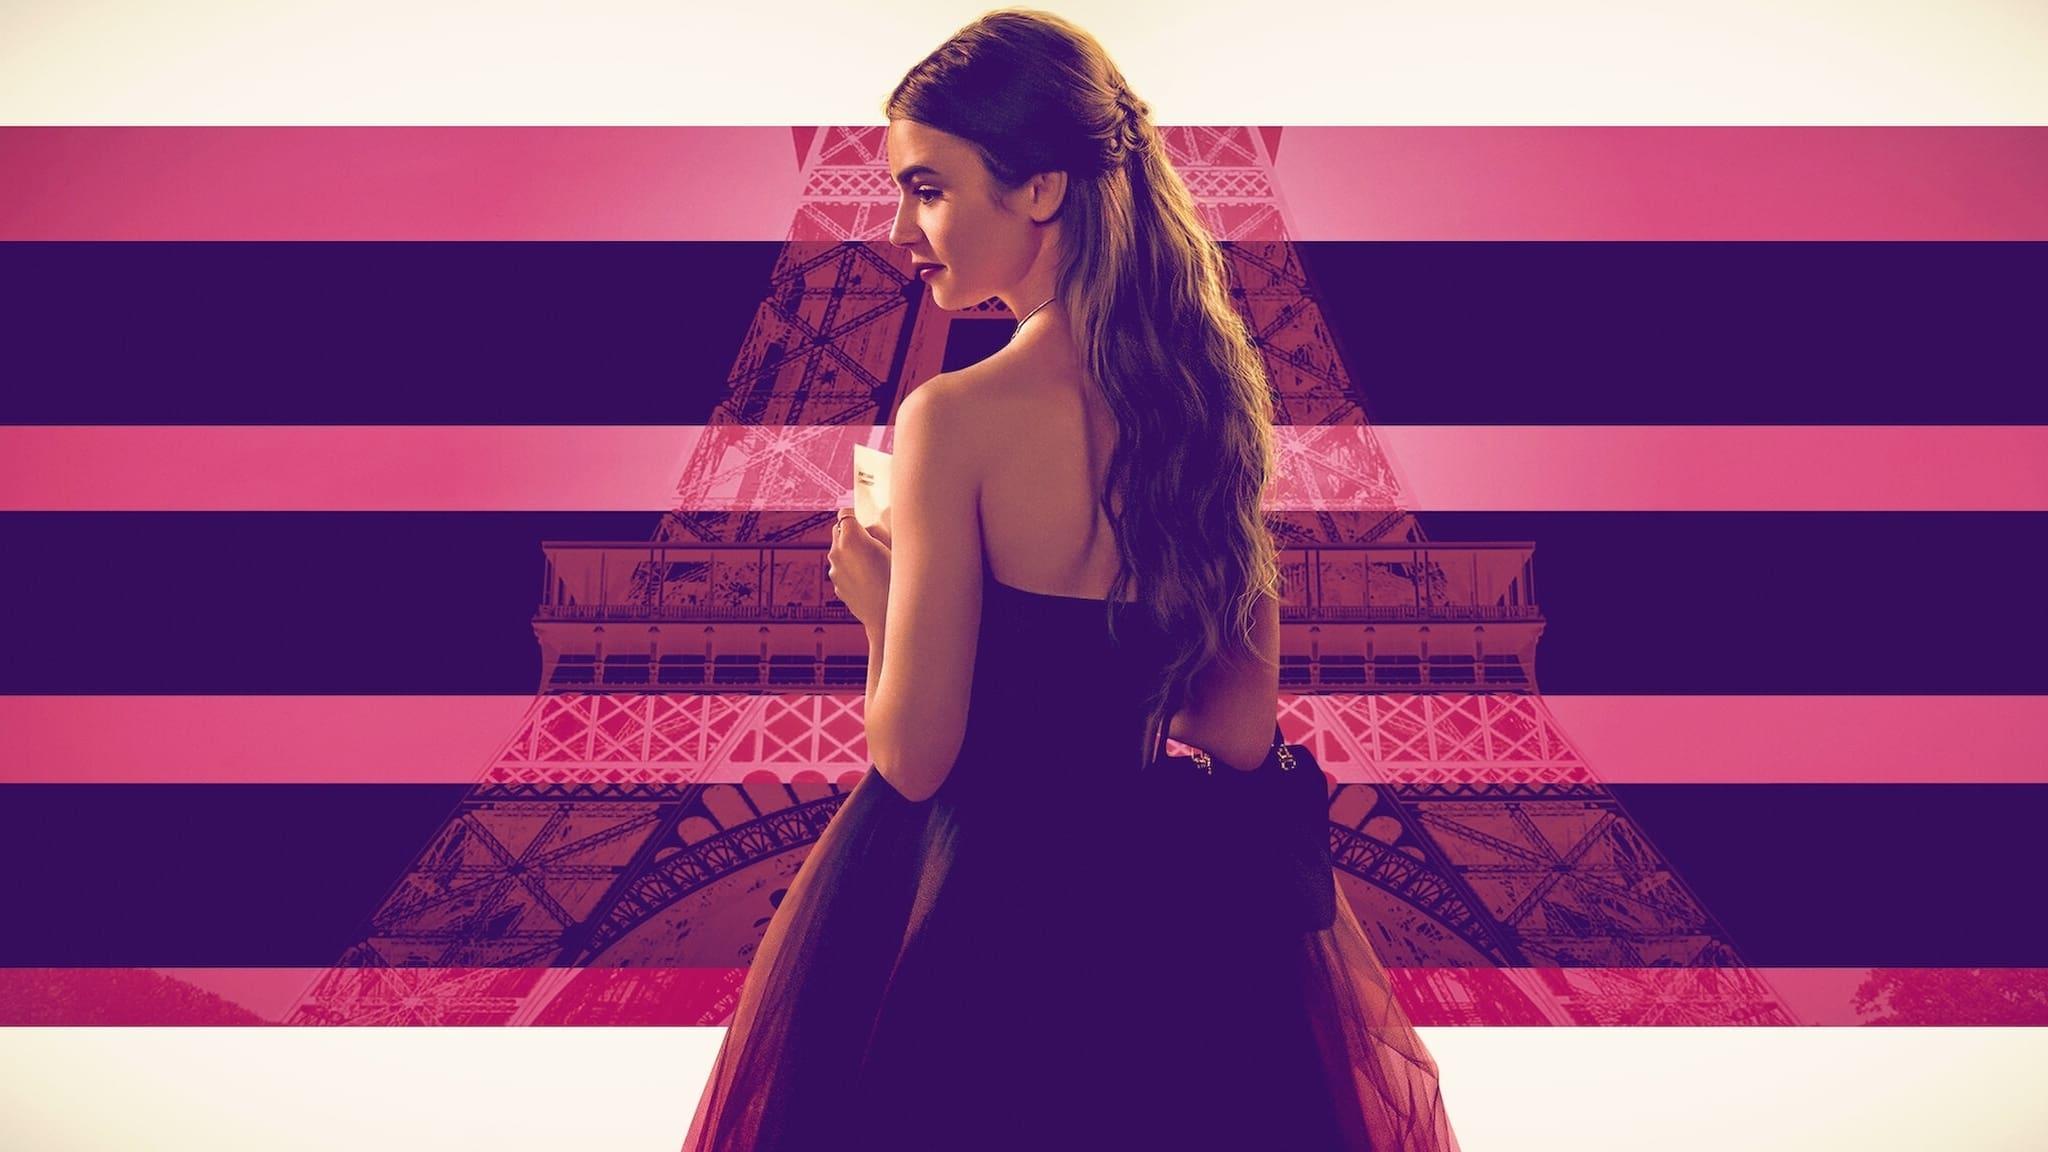 Emily in Paris backdrop